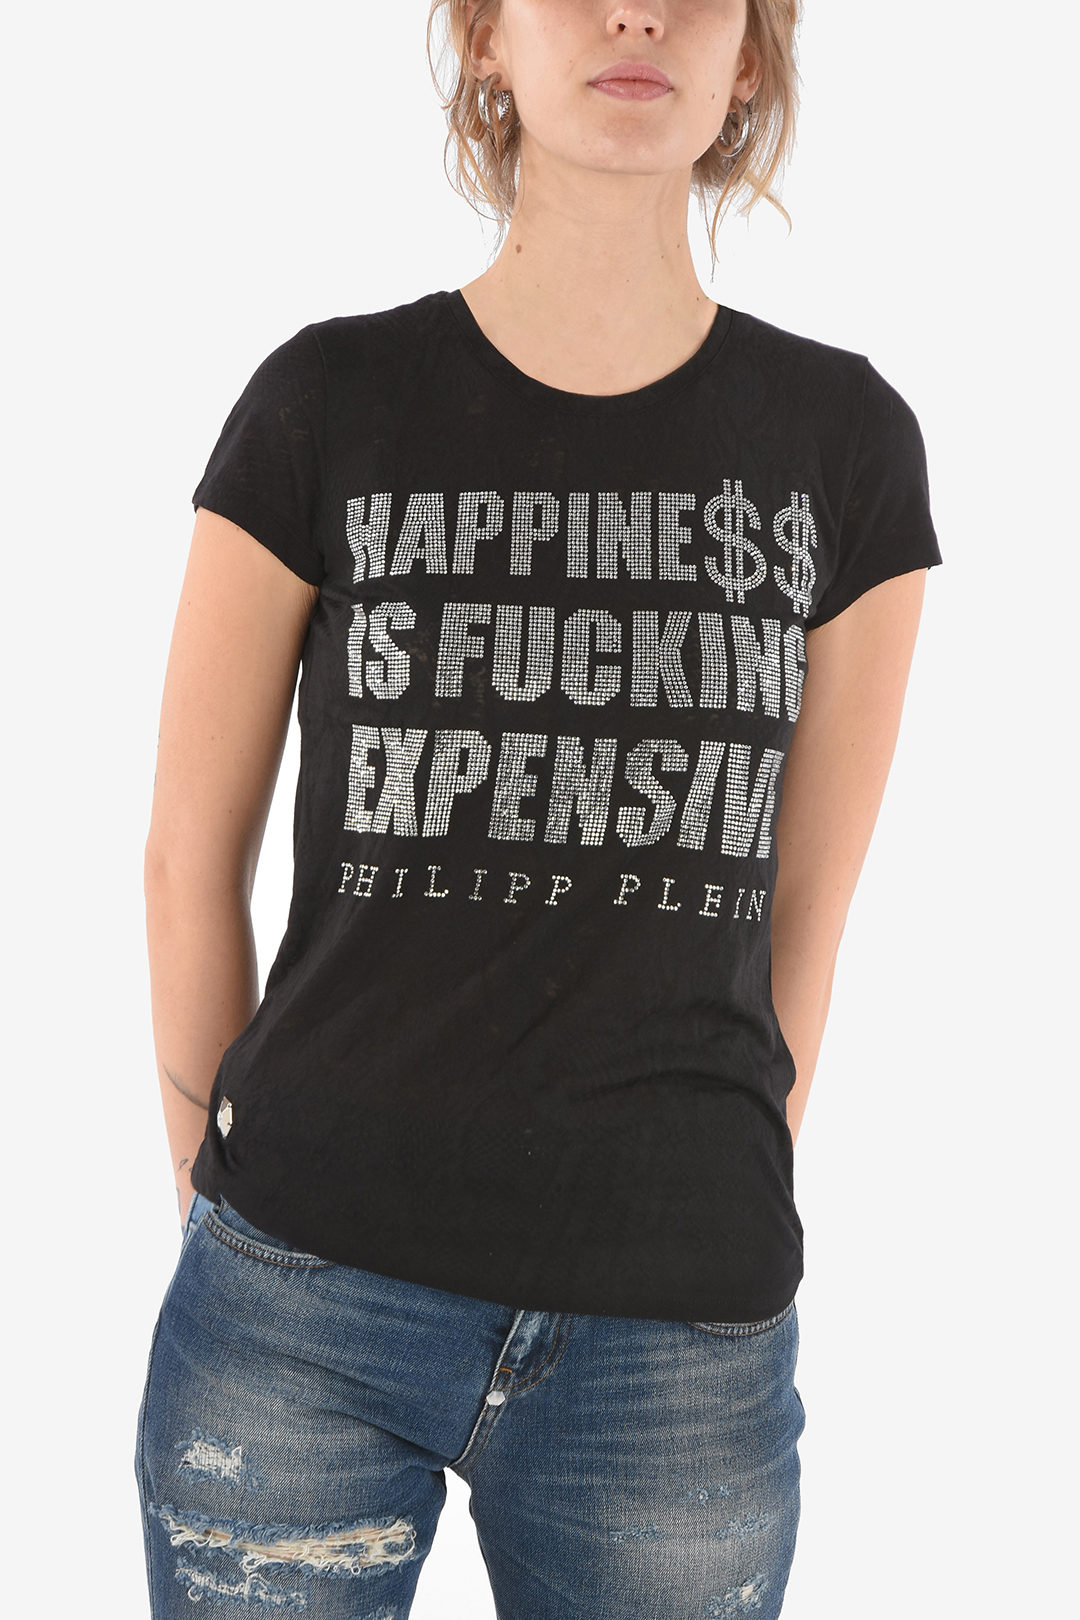 Een goede vriend Mantel Aan boord Philipp Plein Cotton HAPPINE$$ T-Shirt women - Glamood Outlet